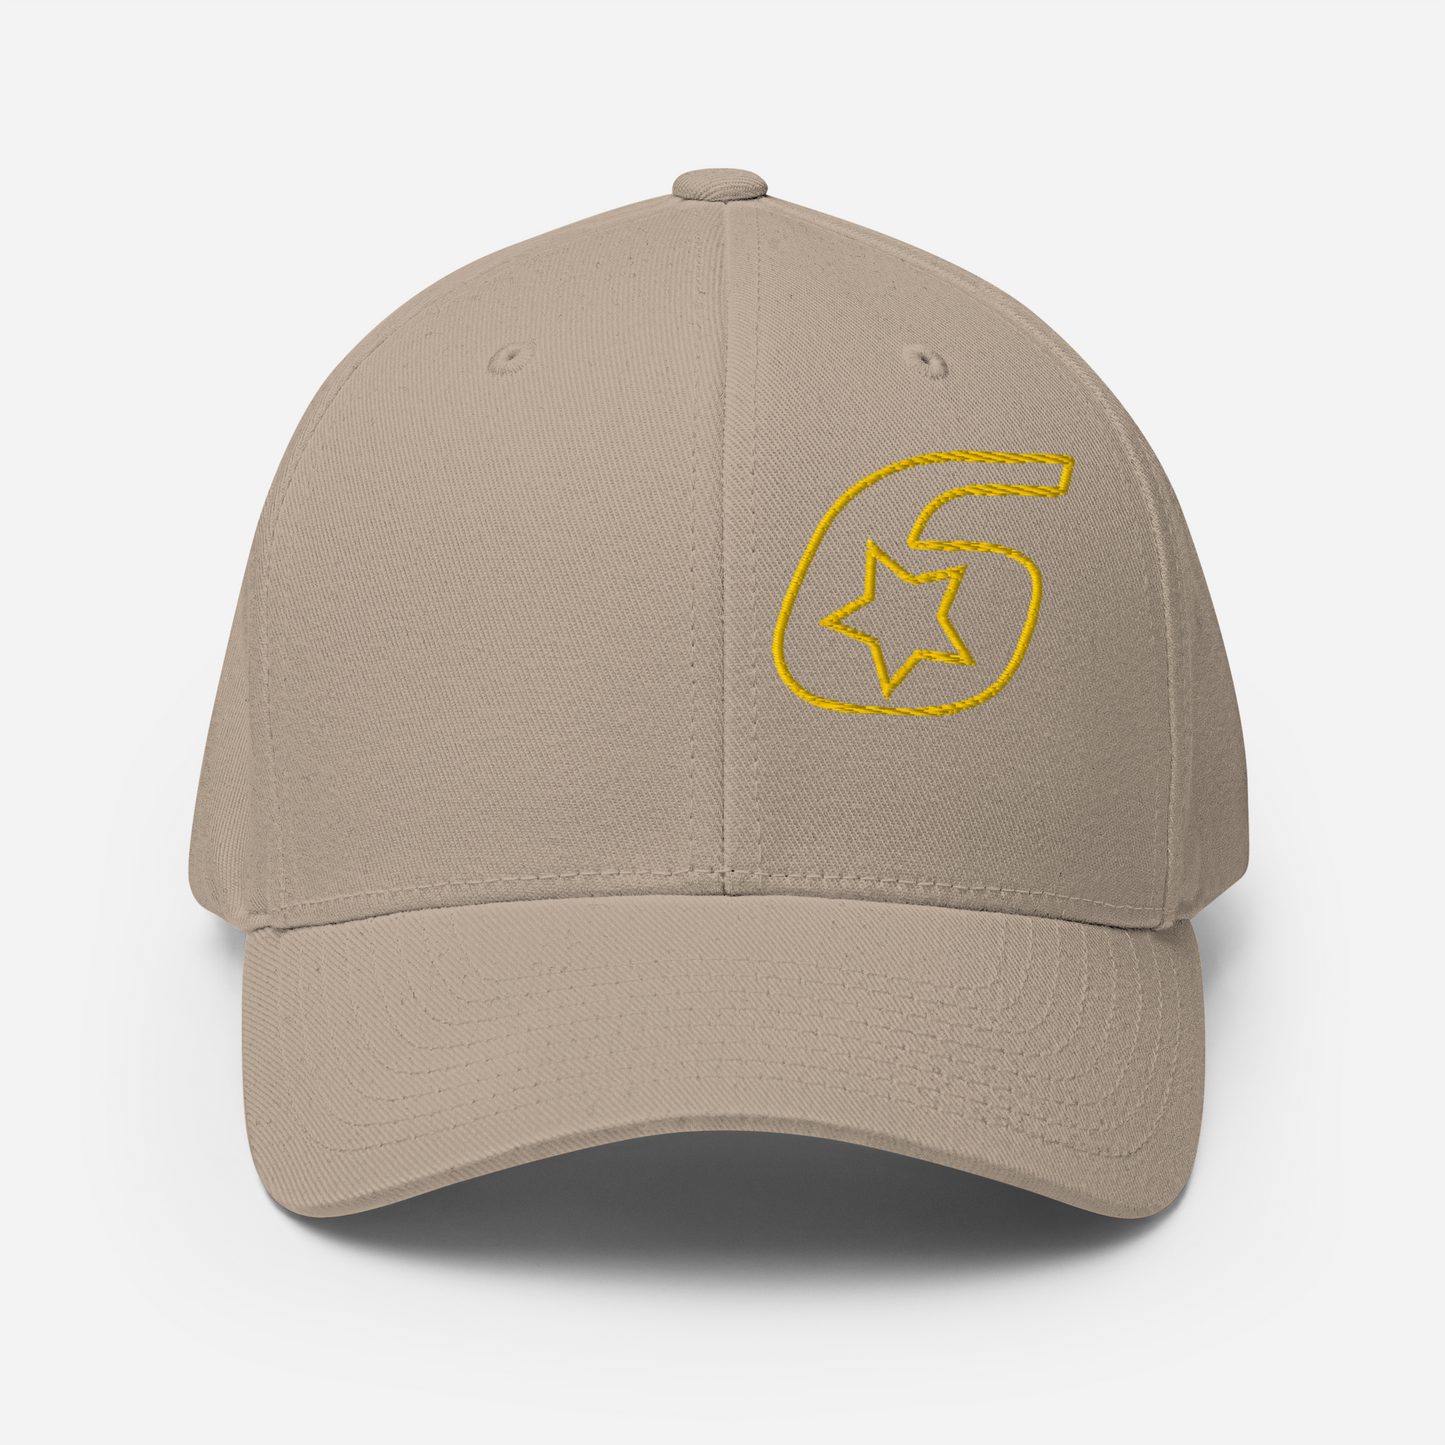 Six Star Motorsports Gold 6 FlexFit Hat